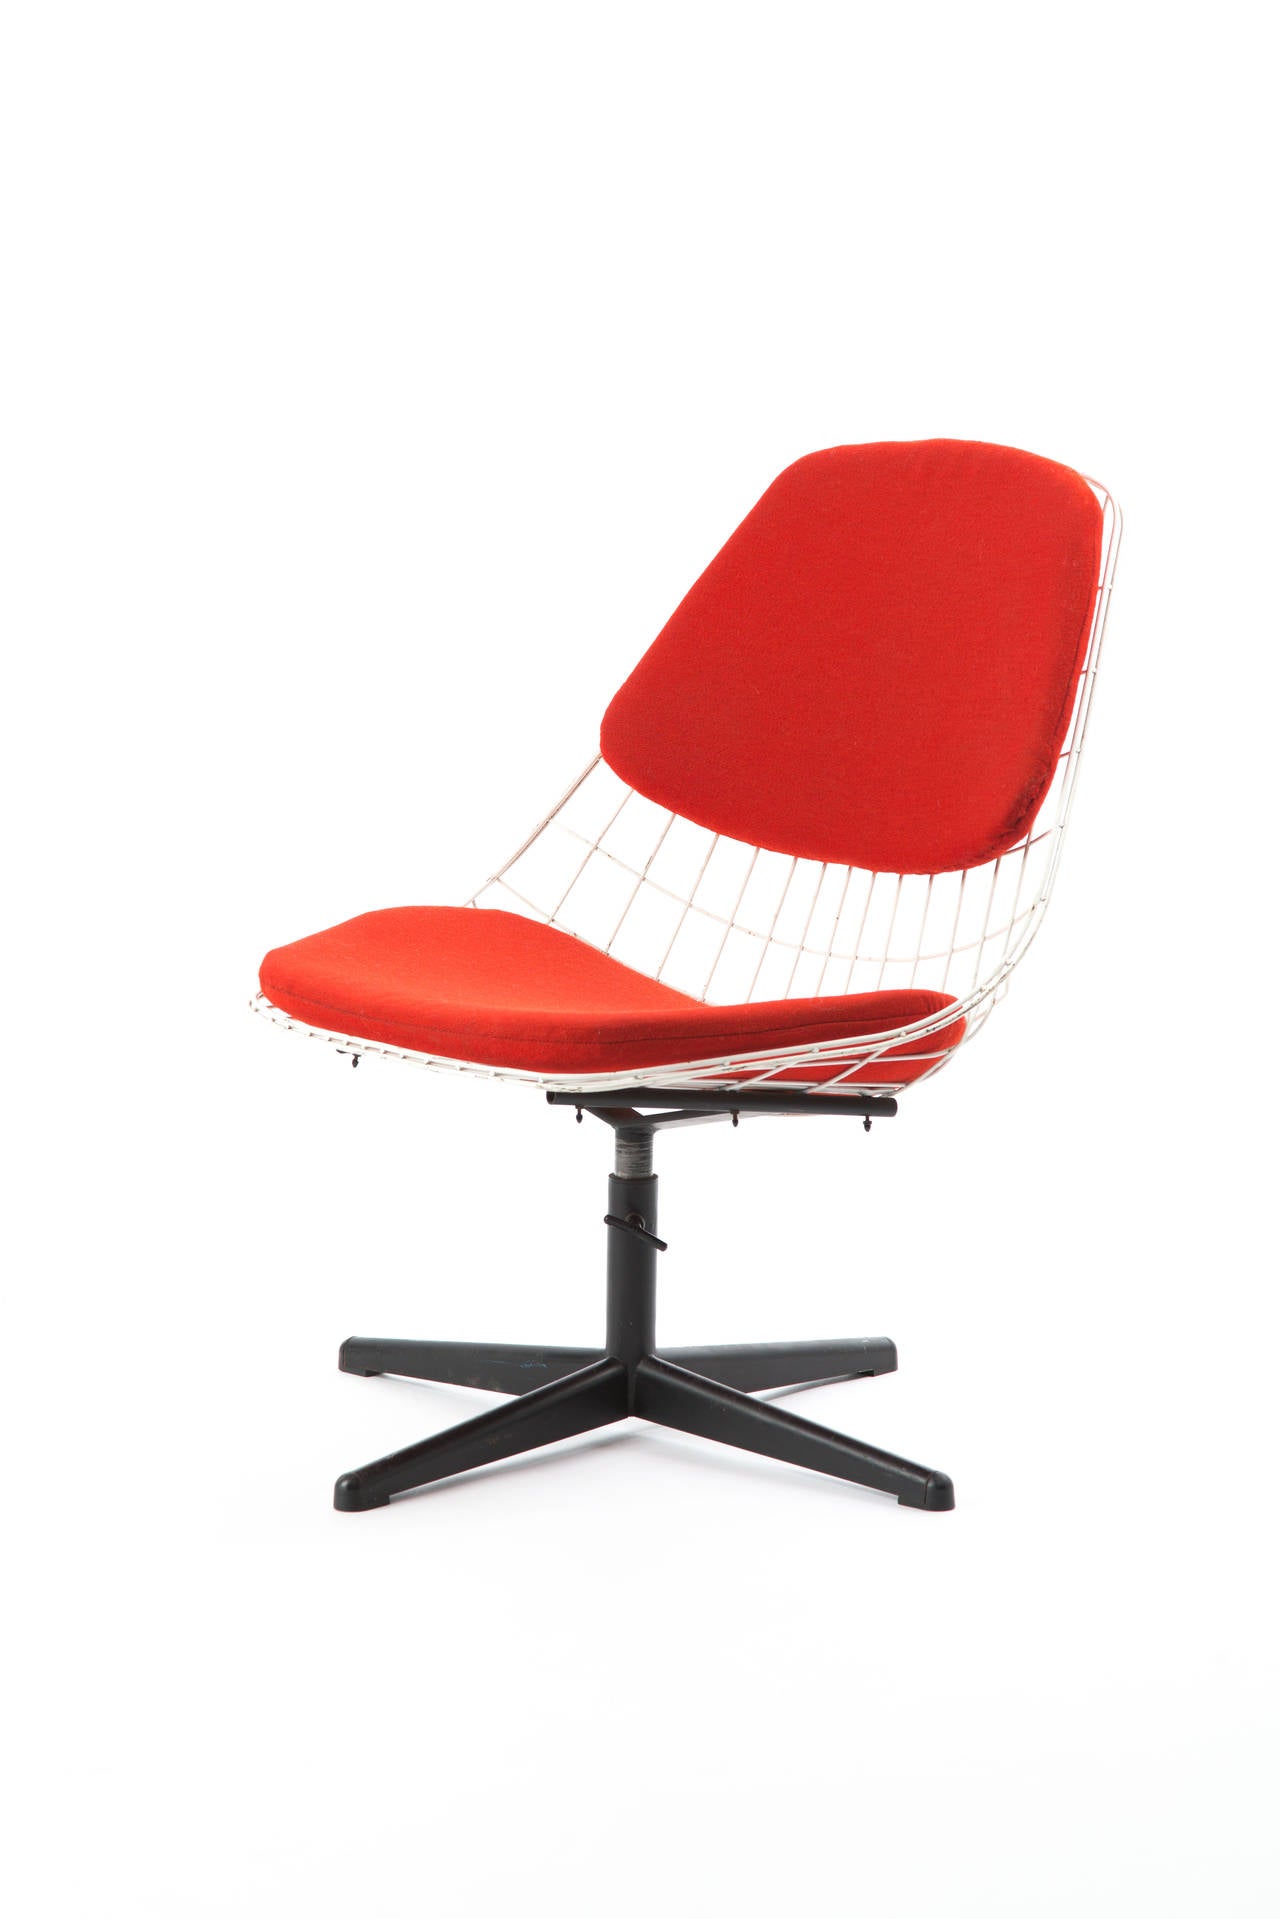 Cees Braakman for Pastoe Swivel Chair In Fair Condition For Sale In LA Arnhem, NL